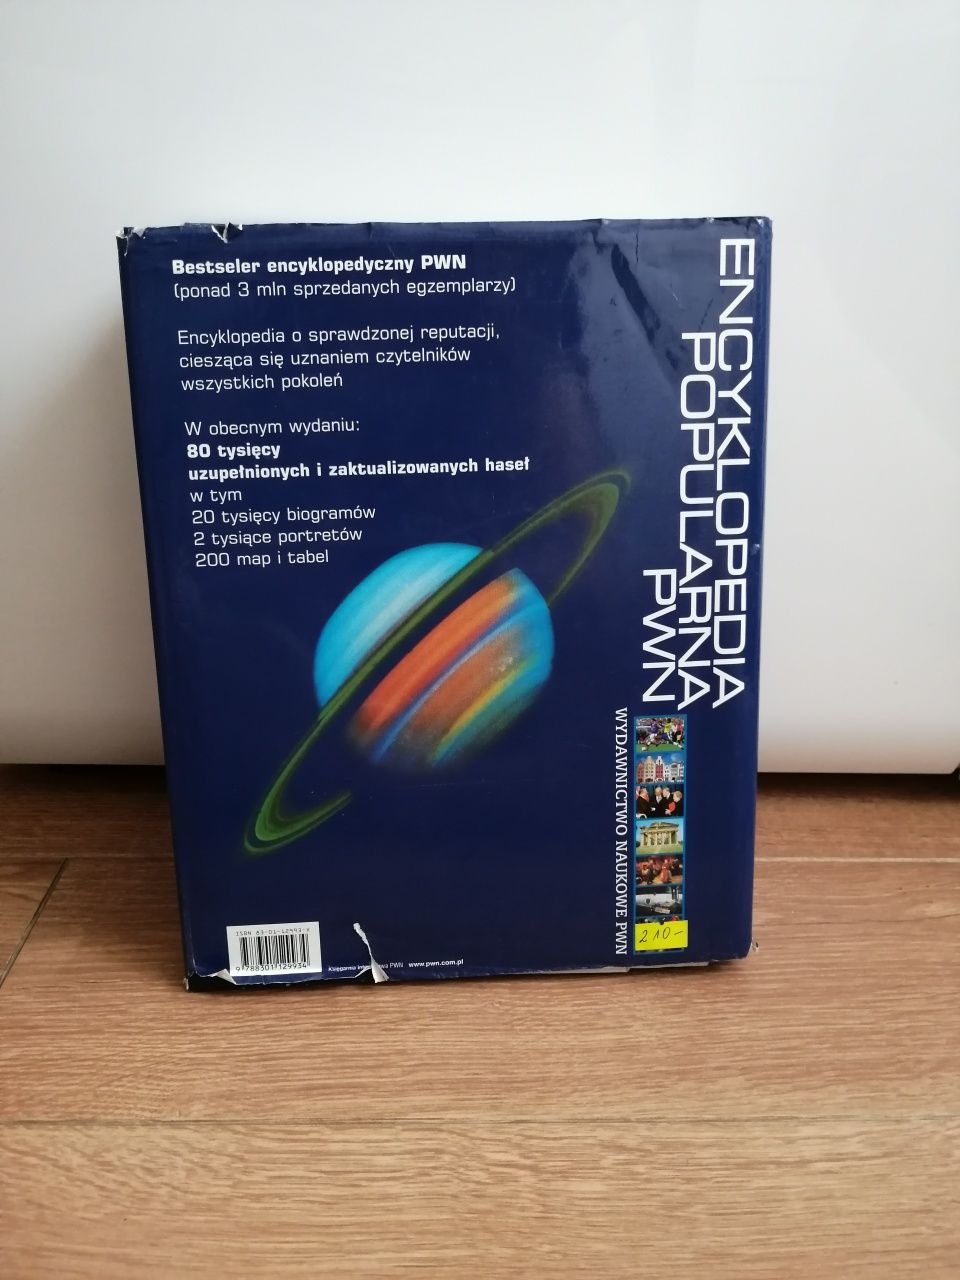 Encyklopedia popularna PWN z 1999 roku